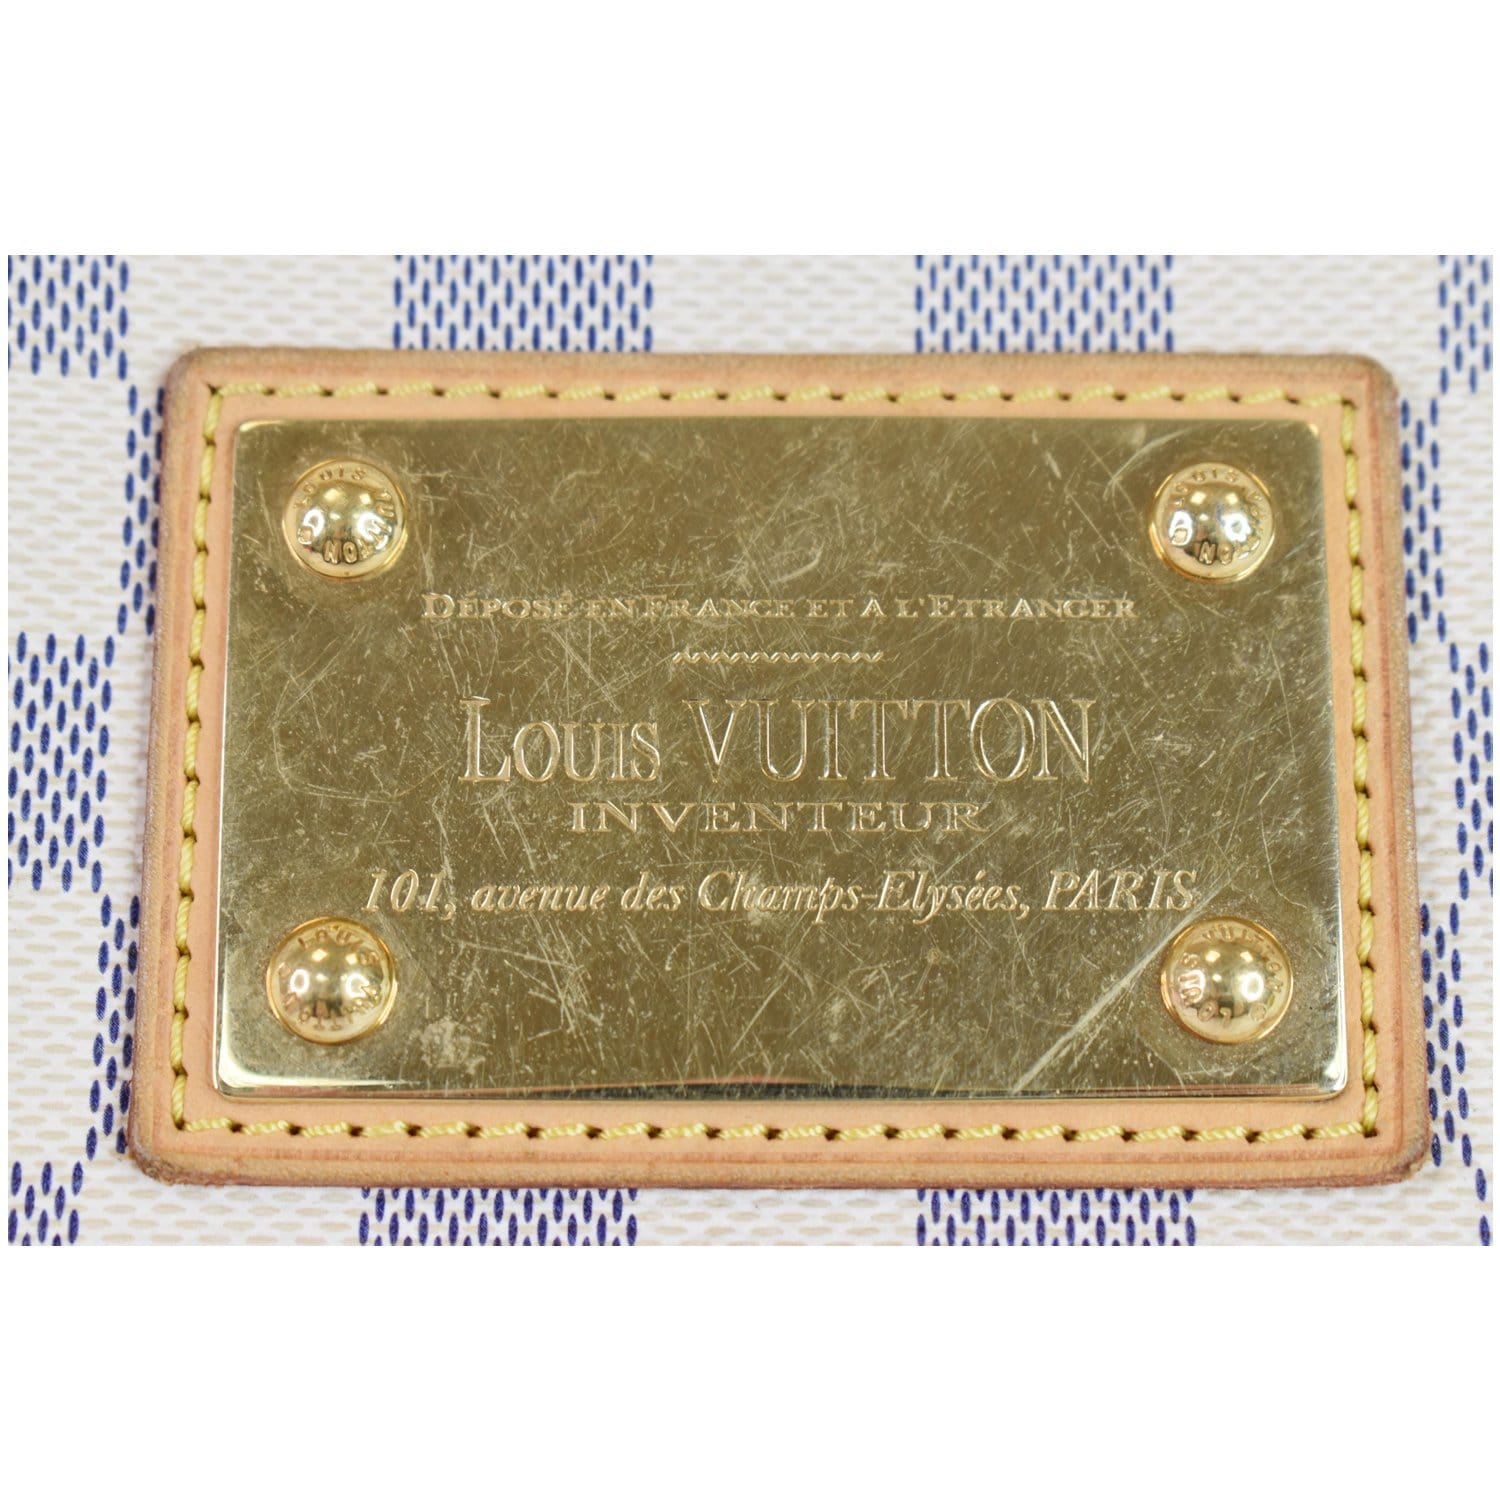 Louis Vuitton Galliera PM White Damier Azur Shoulder Tote Bag at 1stDibs  louis  vuitton bags, white louis vuitton damier print, damier azur galliera pm